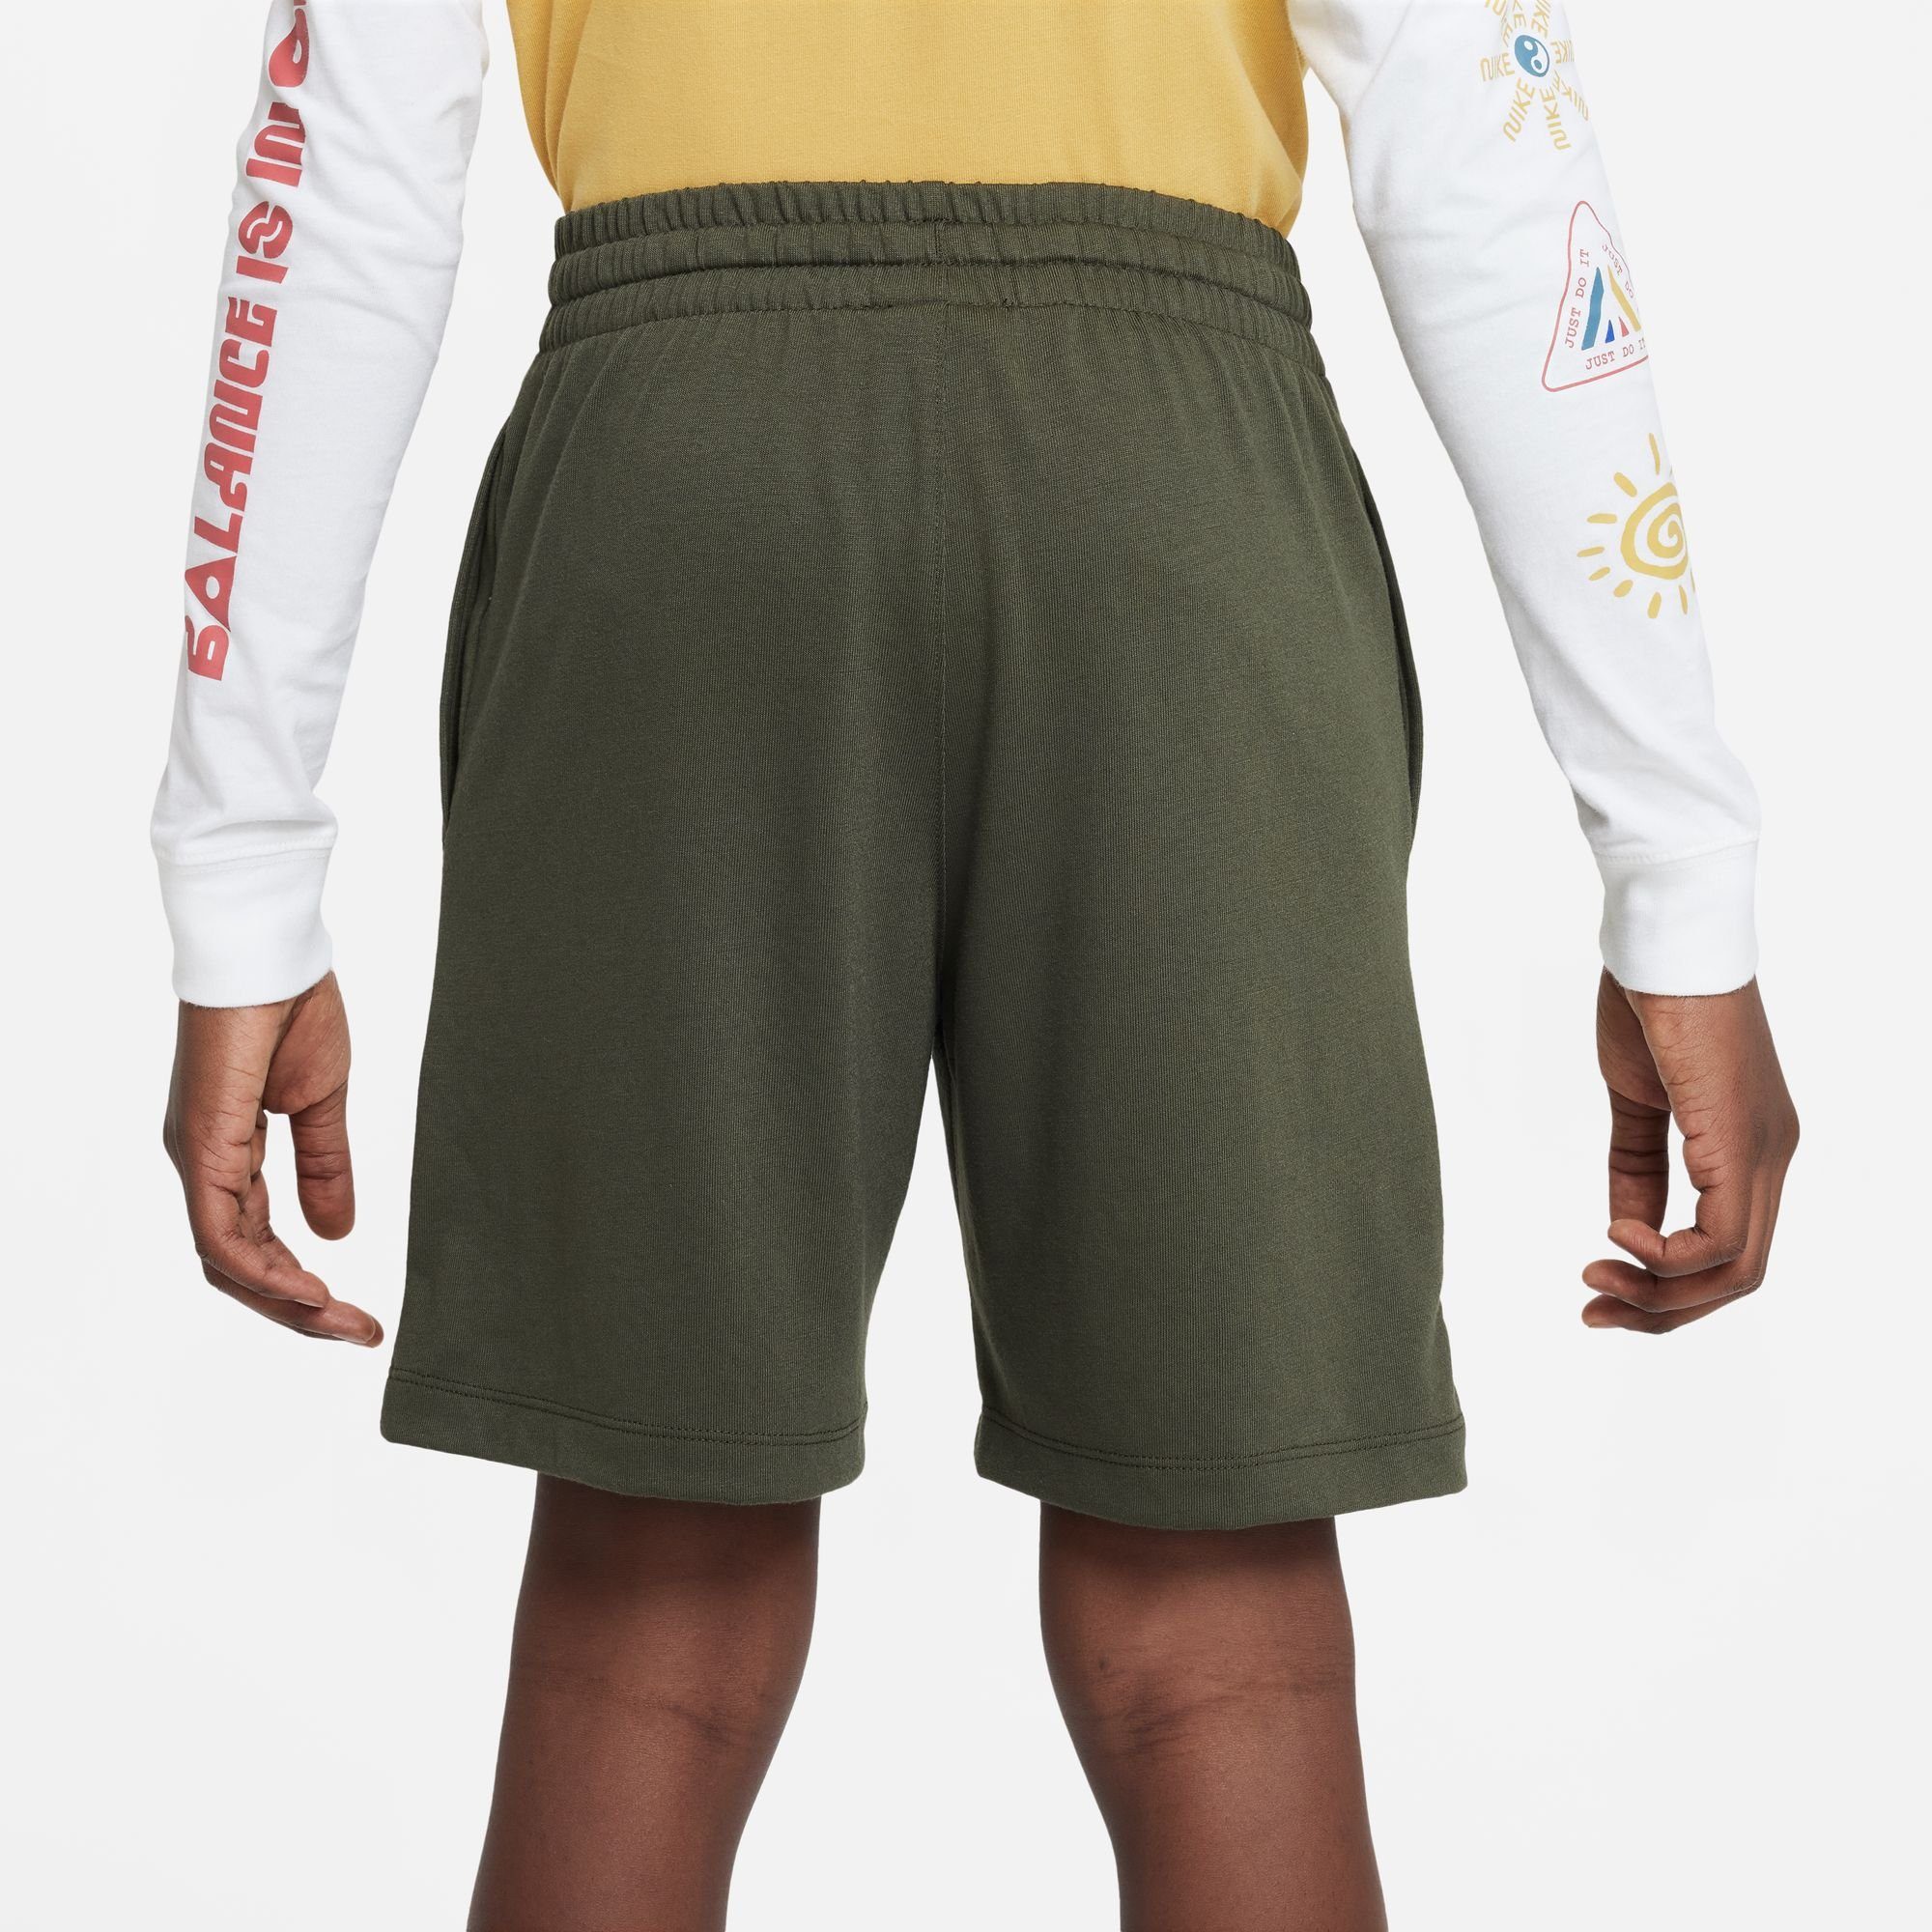 JERSEY CARGO Sportswear BIG SHORTS KIDS' Nike Shorts KHAKI/WHITE (BOYS)